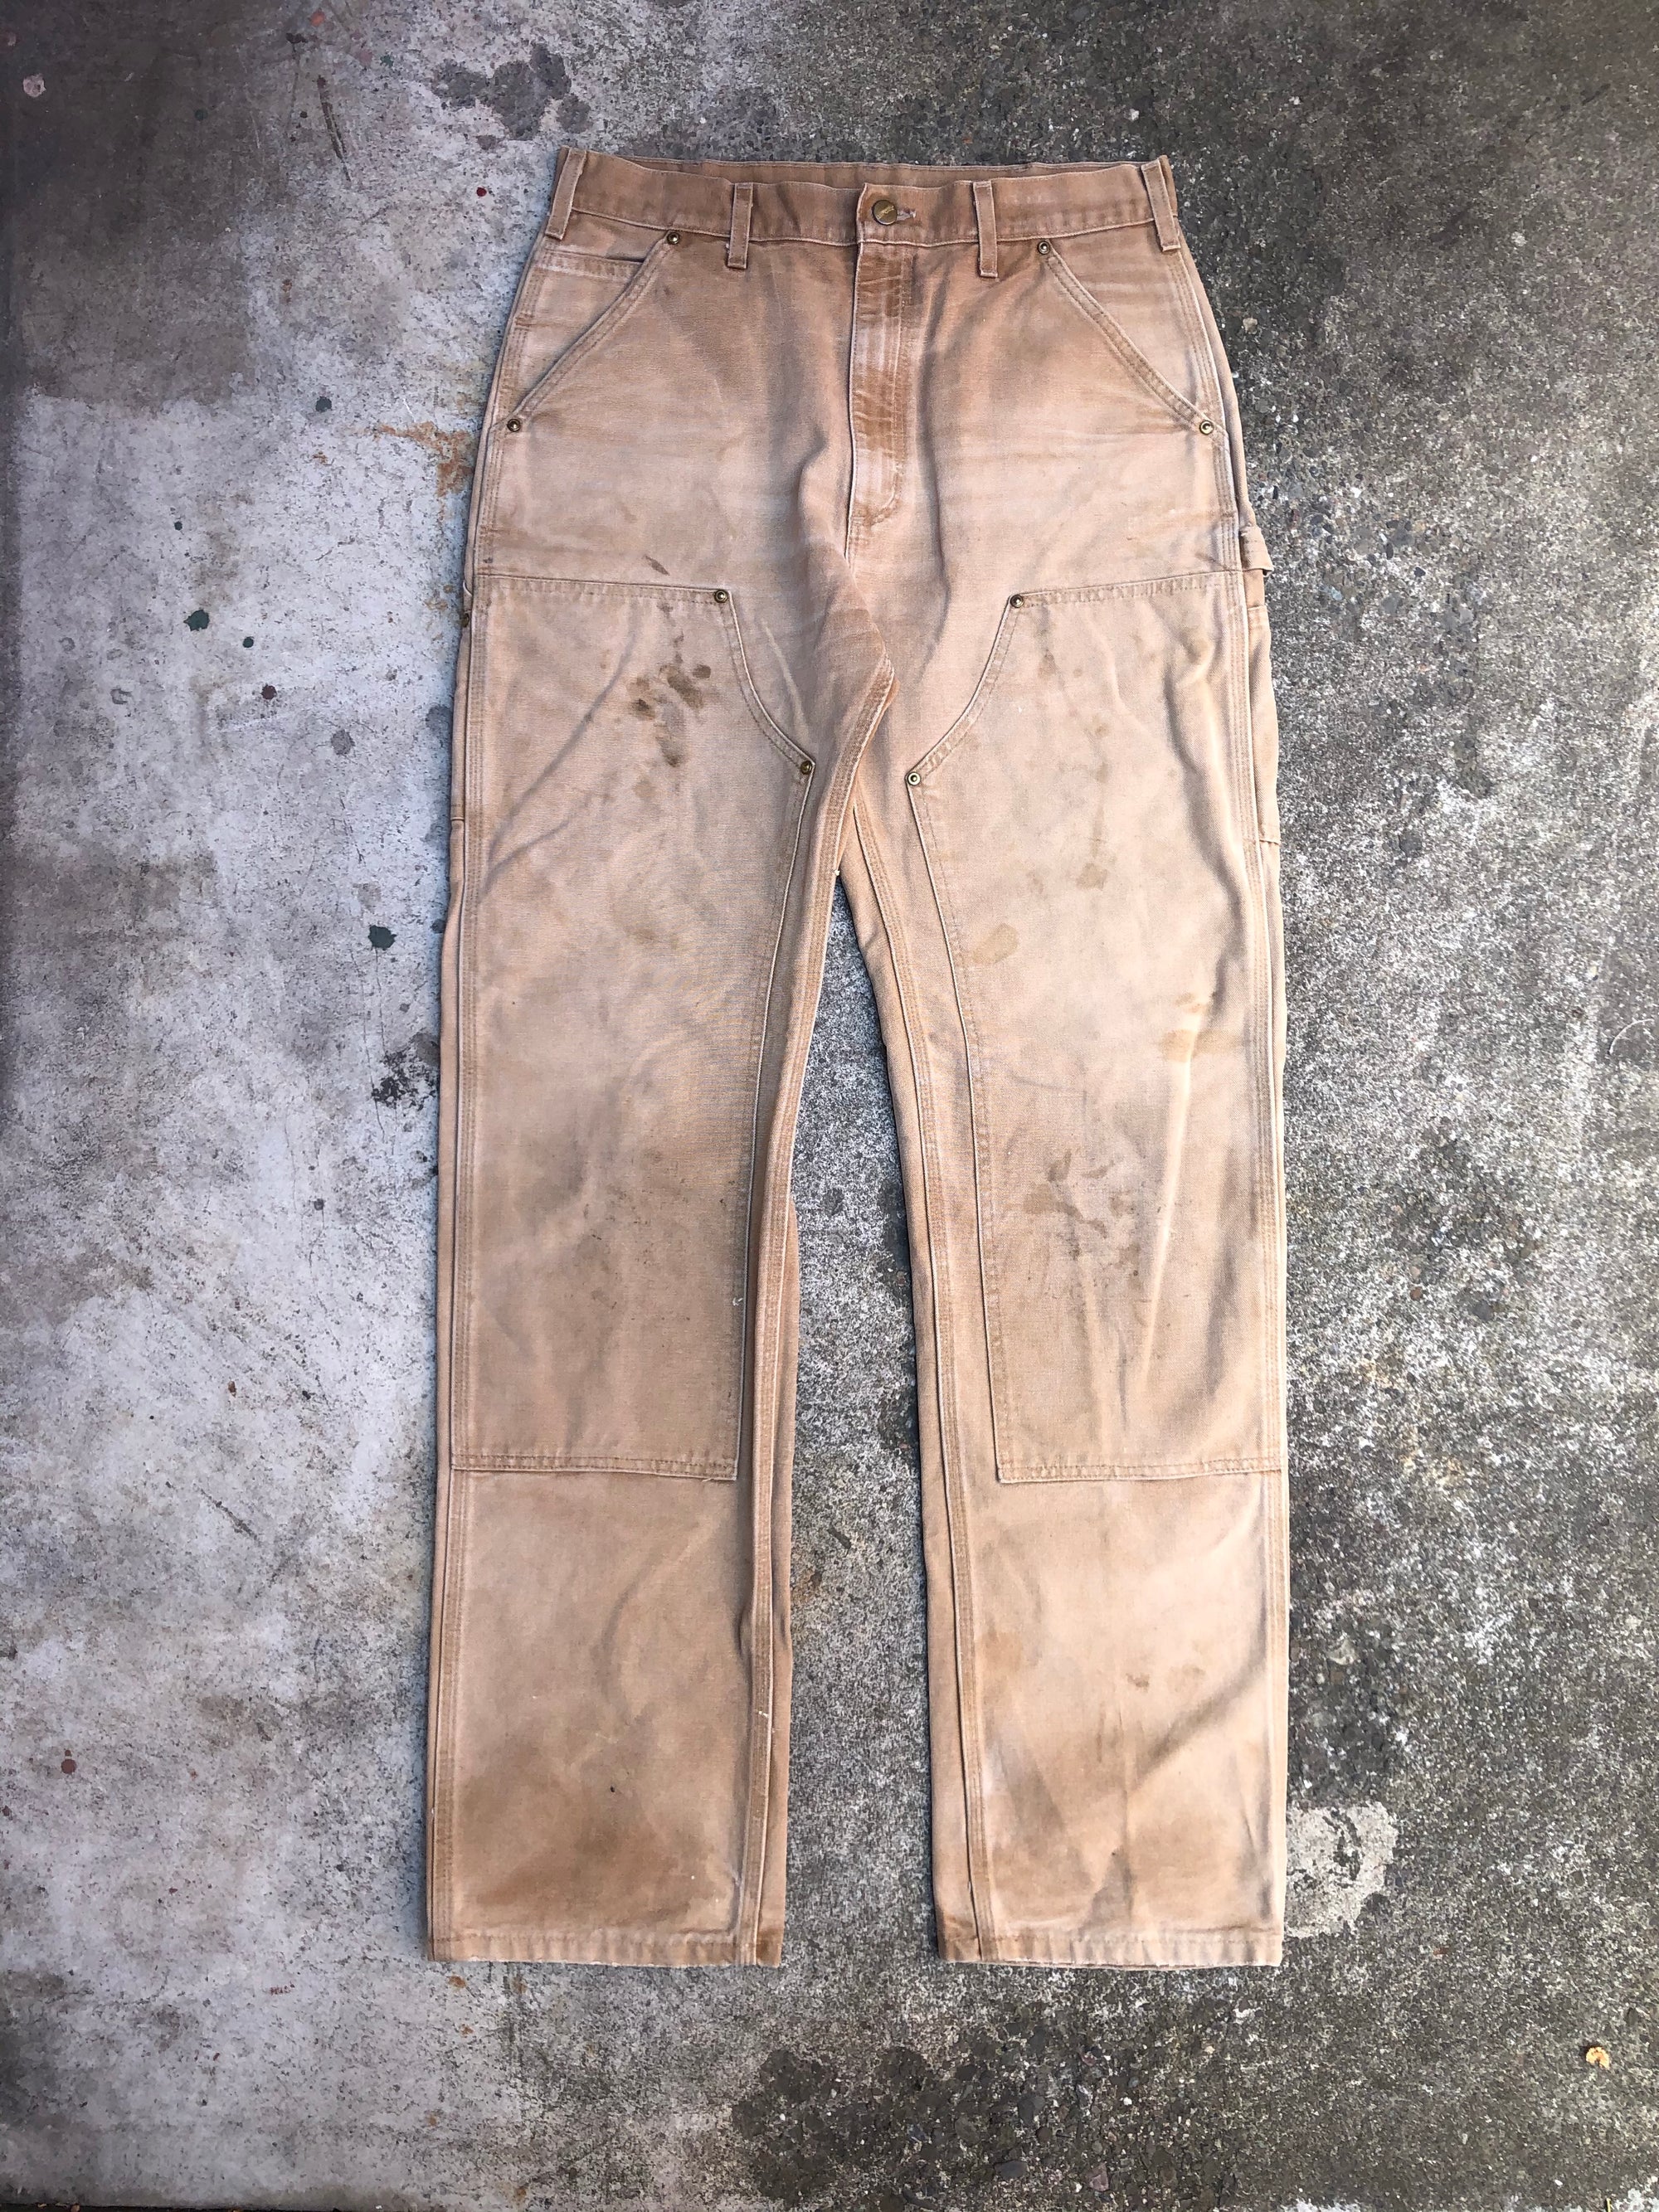 Carhartt B01 Tan Double Front Knee Work Pants (32X34)